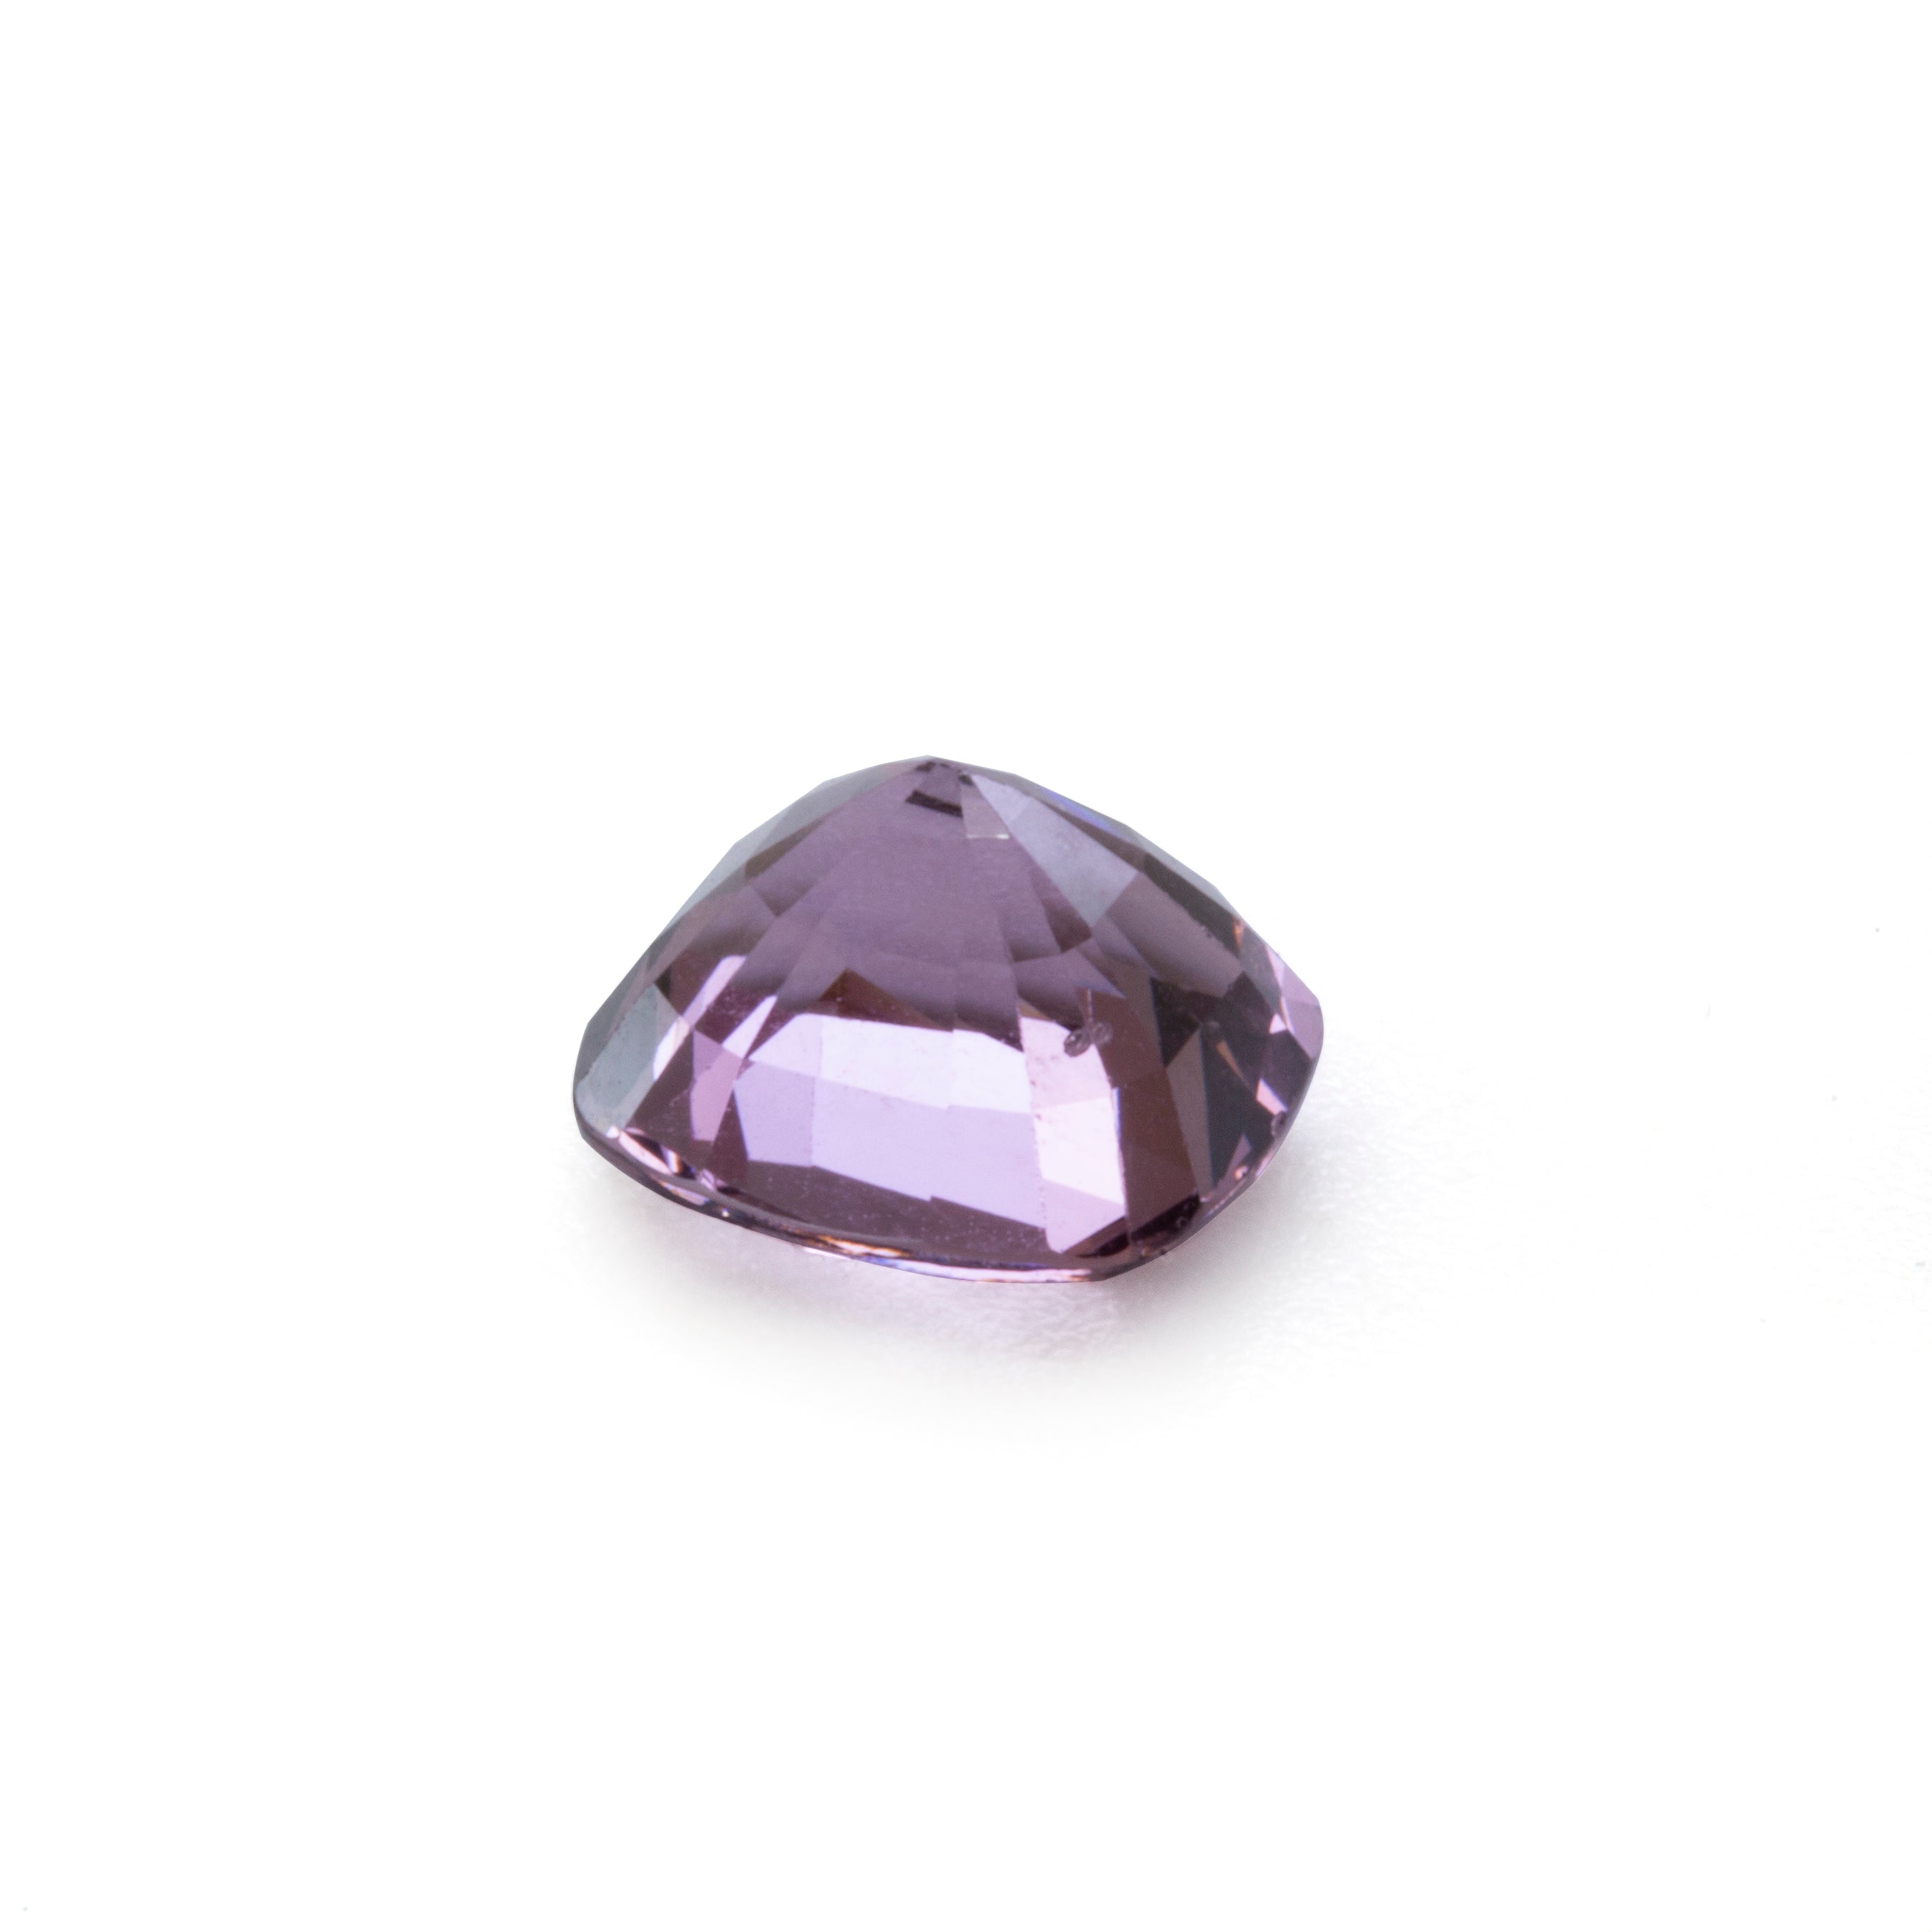 Purple Spinel 3.73 carat Cushion Cut Faceted Gemstone - 23-014 - Crystalarium